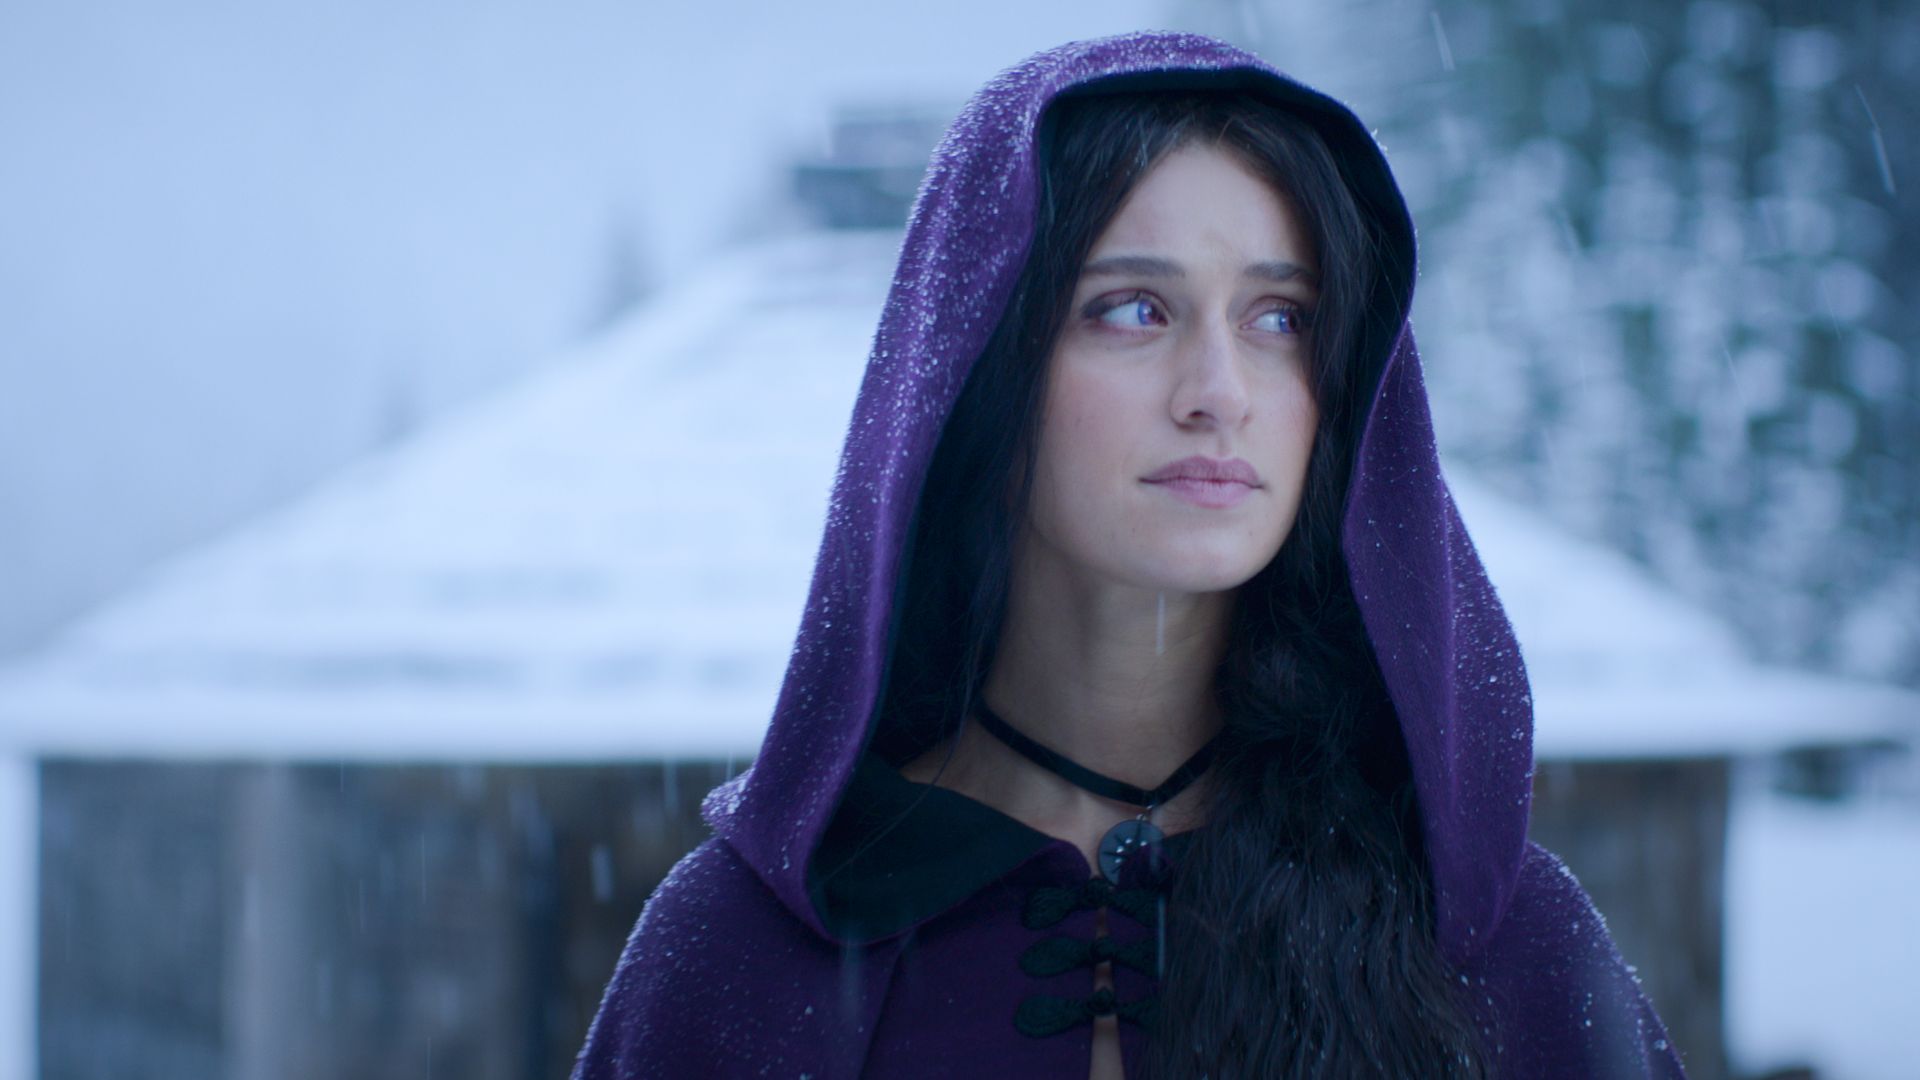 Yennefer wearing a purple cloak in The Witcher season three. 